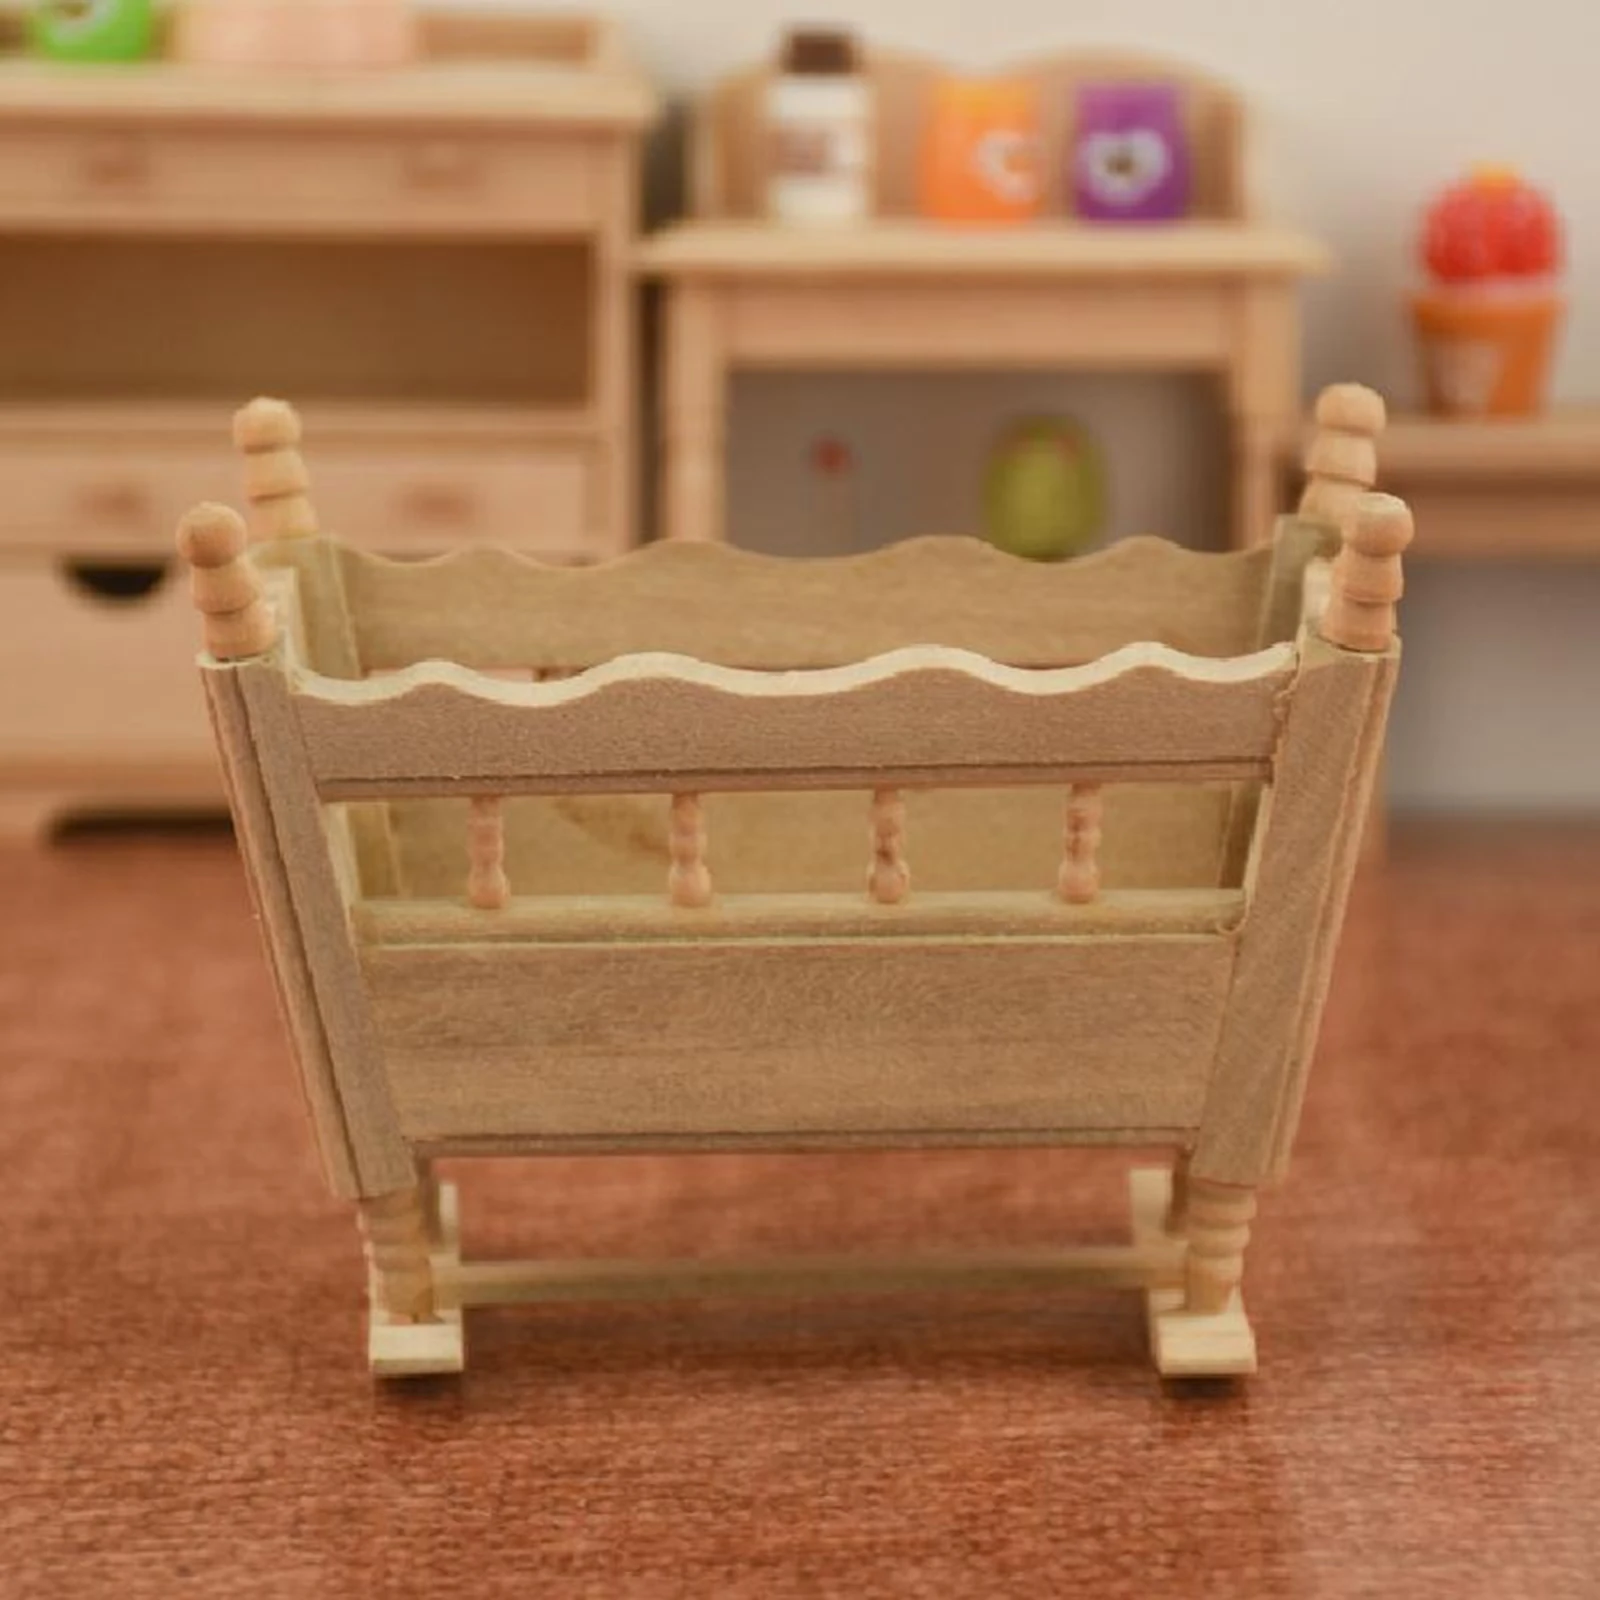 1/12 Dollhouse Mini Wooden Bassinet Model Baby Doll Living Room Furniture